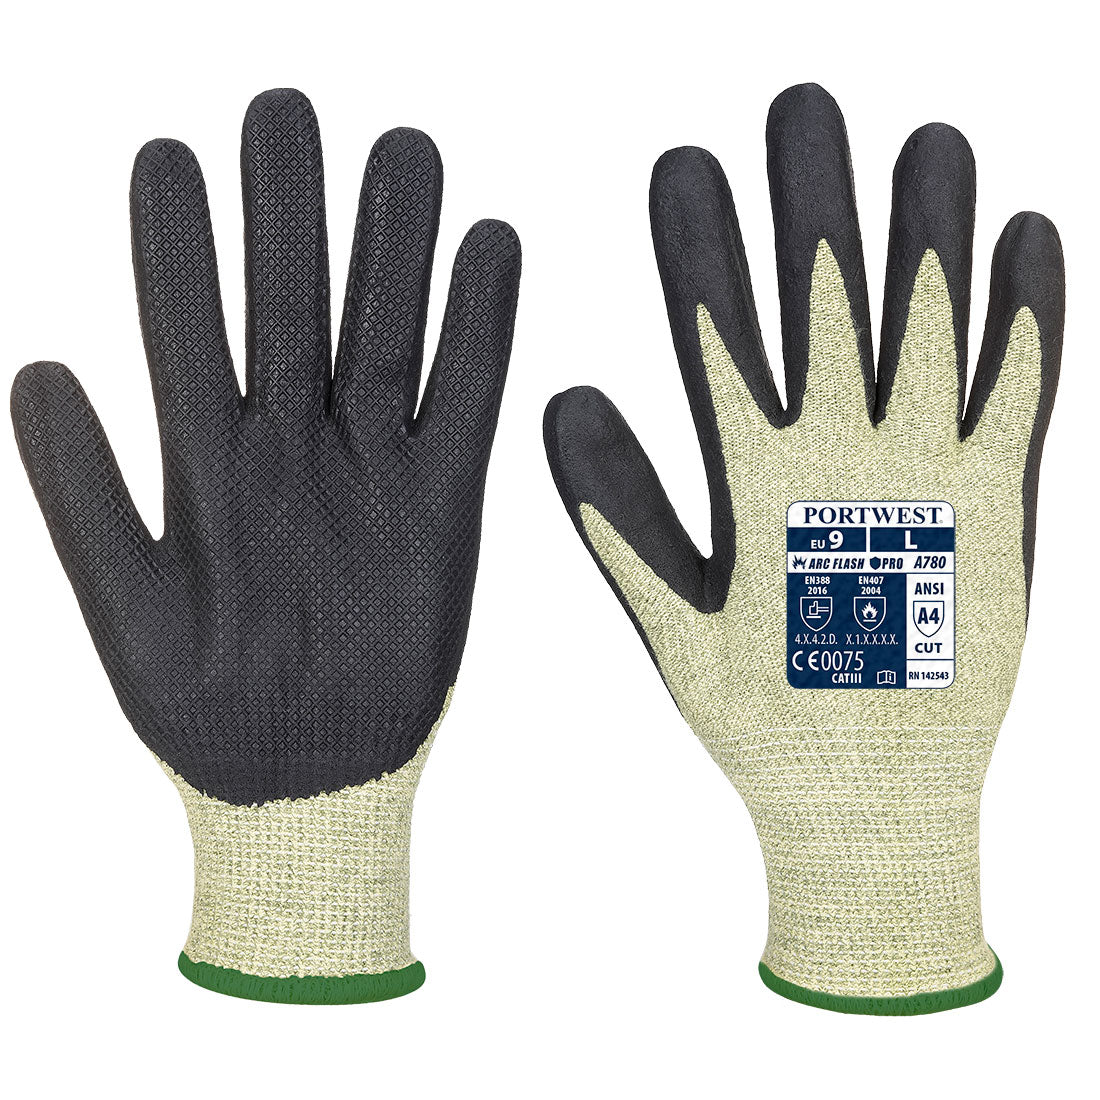 ARC Grip Glove Green/Black - A780 Palm & Back 